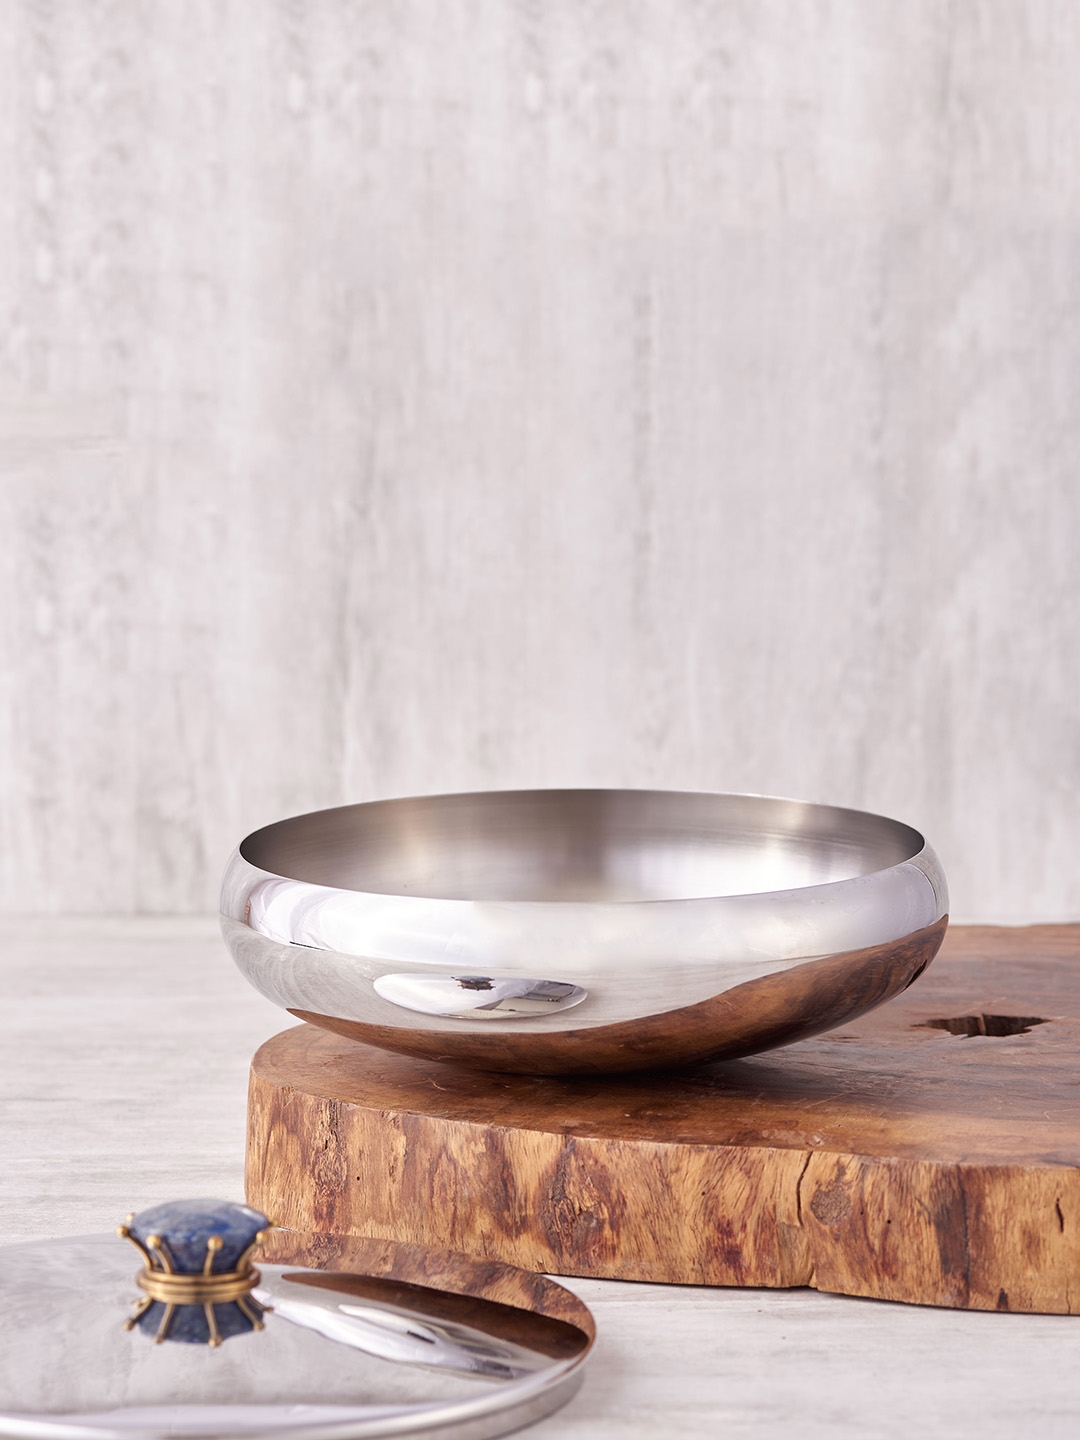 ARTTDINOX Steel-Toned Solid Stainless Steel Royal Lapiz Serving Bowl